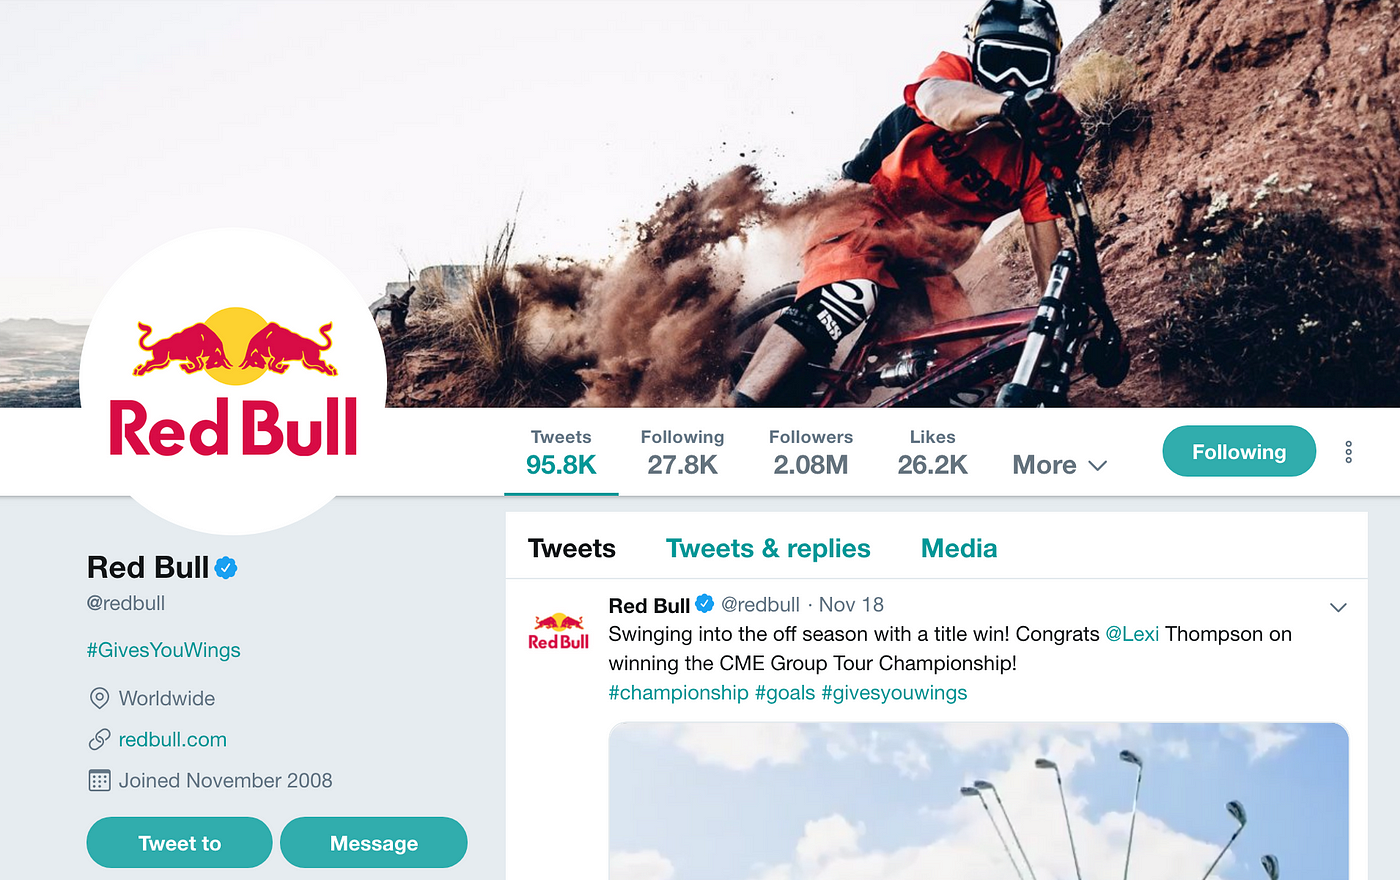 Blog Post #2: The Success of Red Bull's Social Media Platforms | by Maddie E | Medium